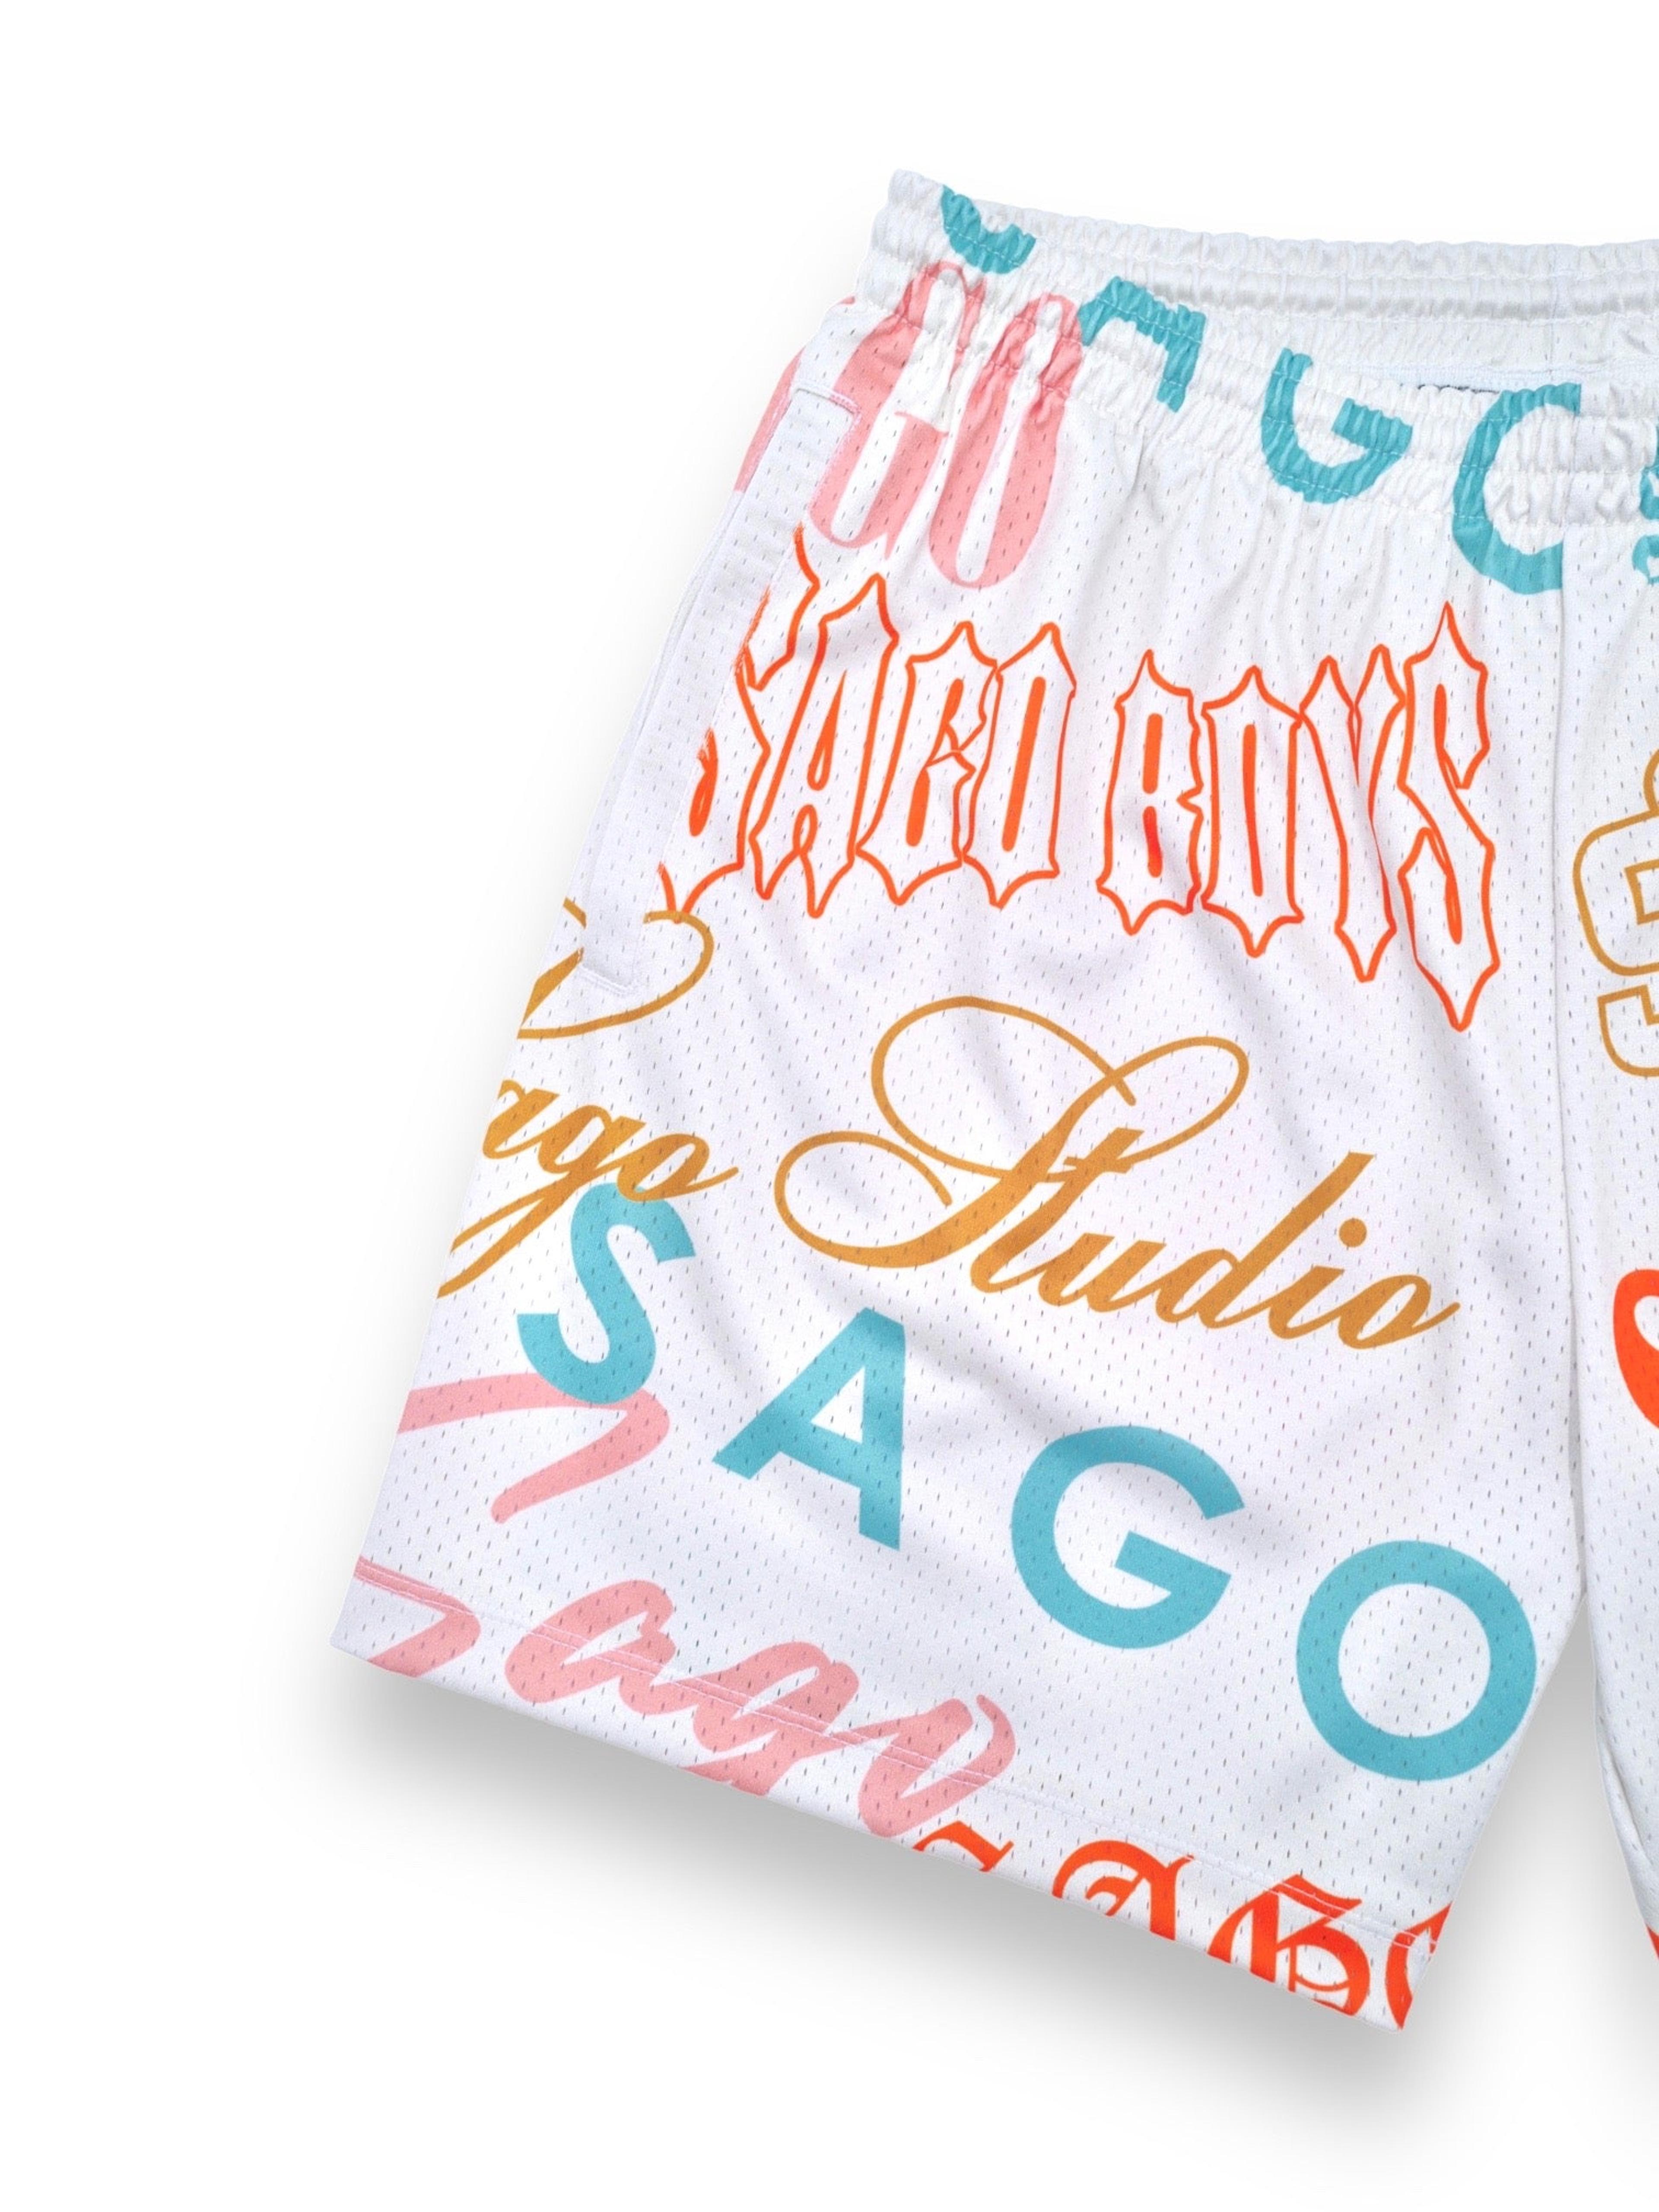 Alternate View 1 of Sago logo shorts (multicolor)